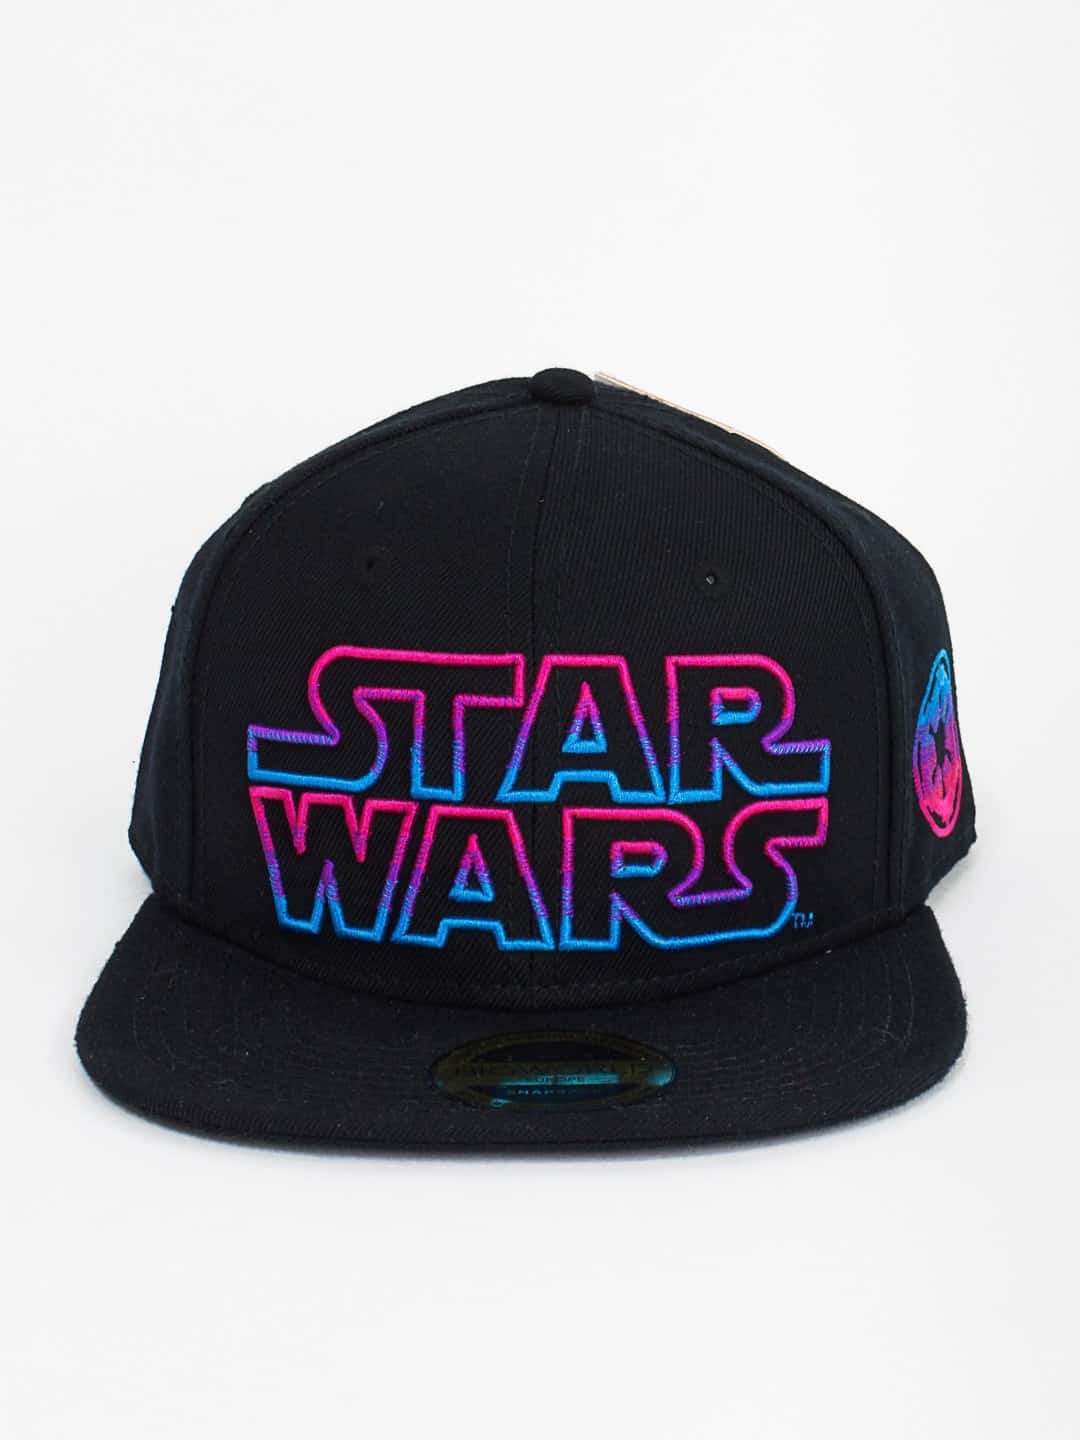 Star Wars - Black Snapback With Coloured Star Wars Logo